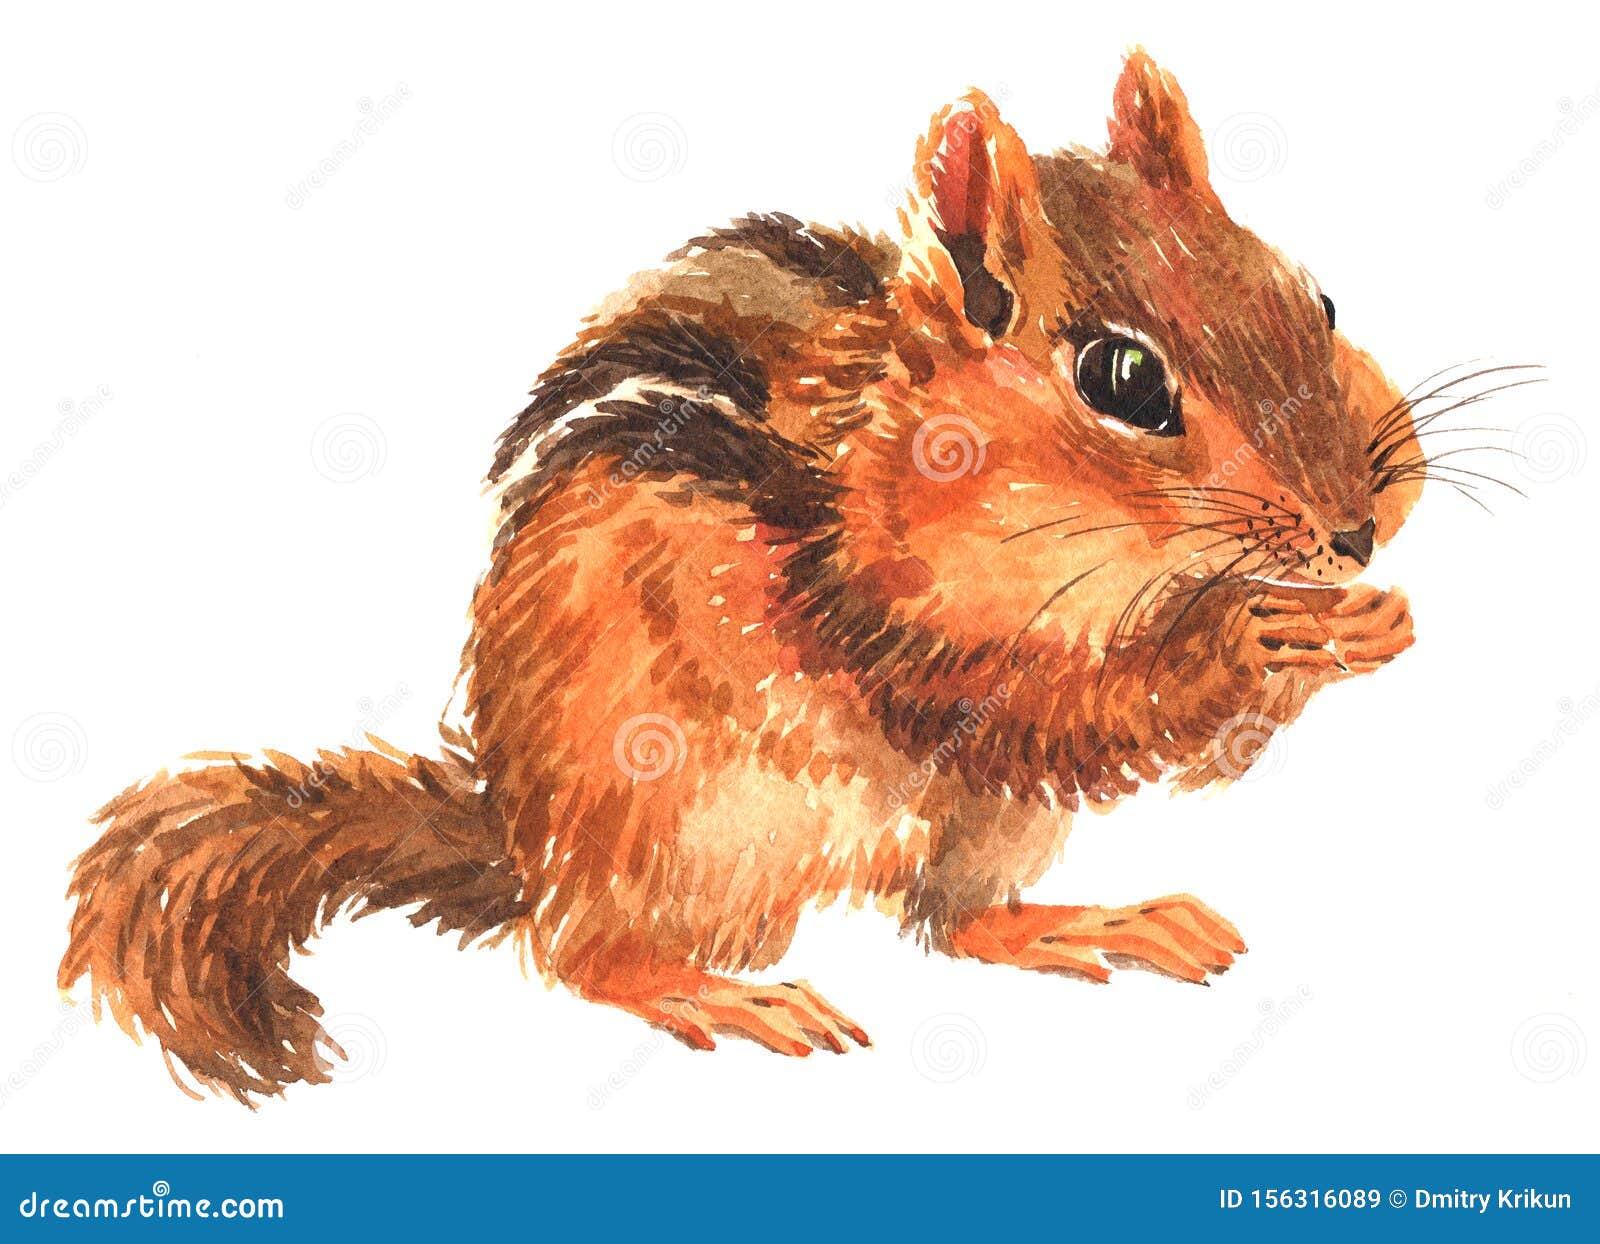 watercolor single chipmunk animal